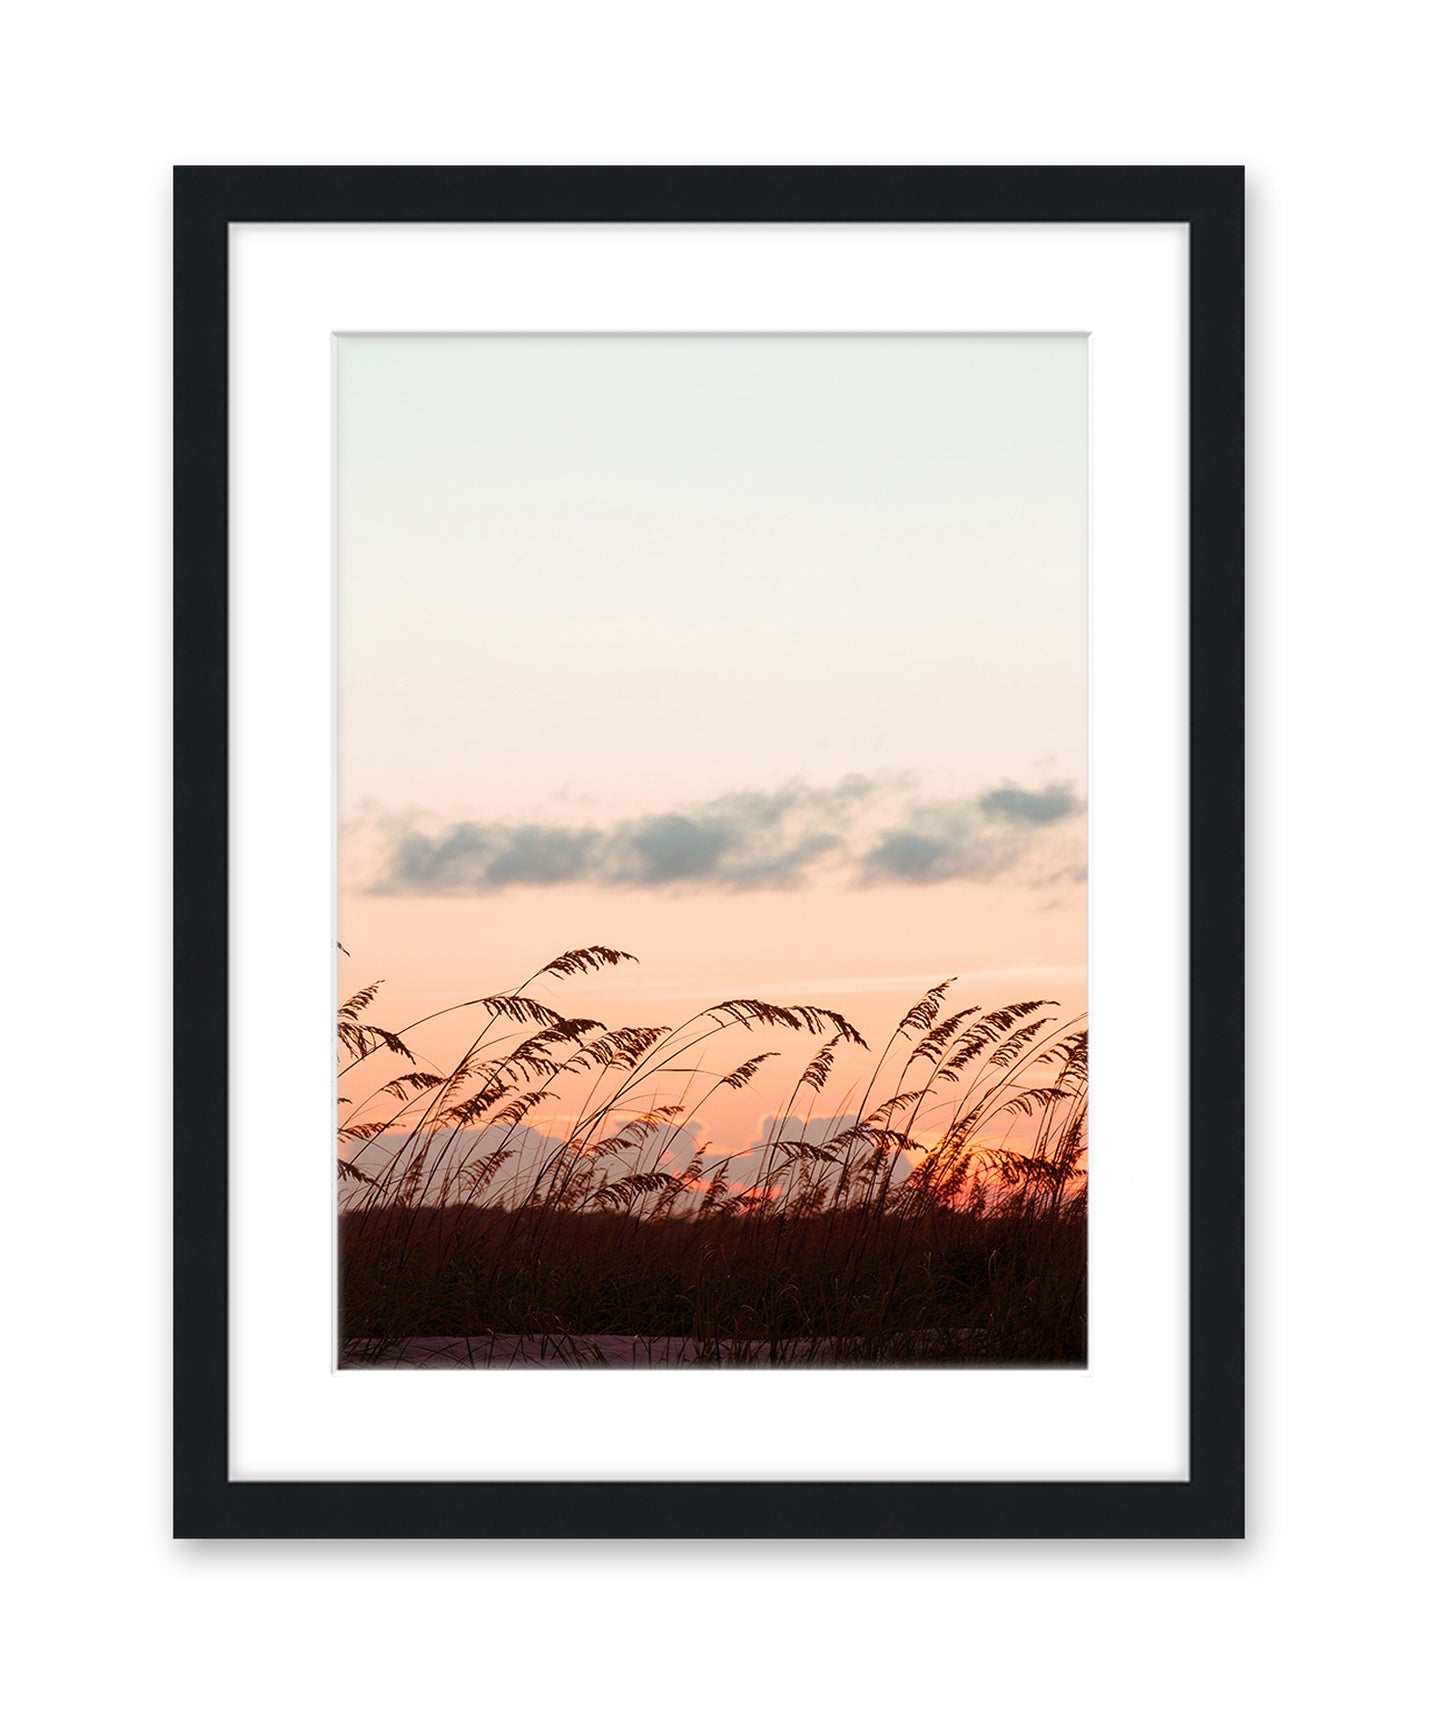 Sunset Beach Print, Sea Grass, Black Frame, Wright and Roam